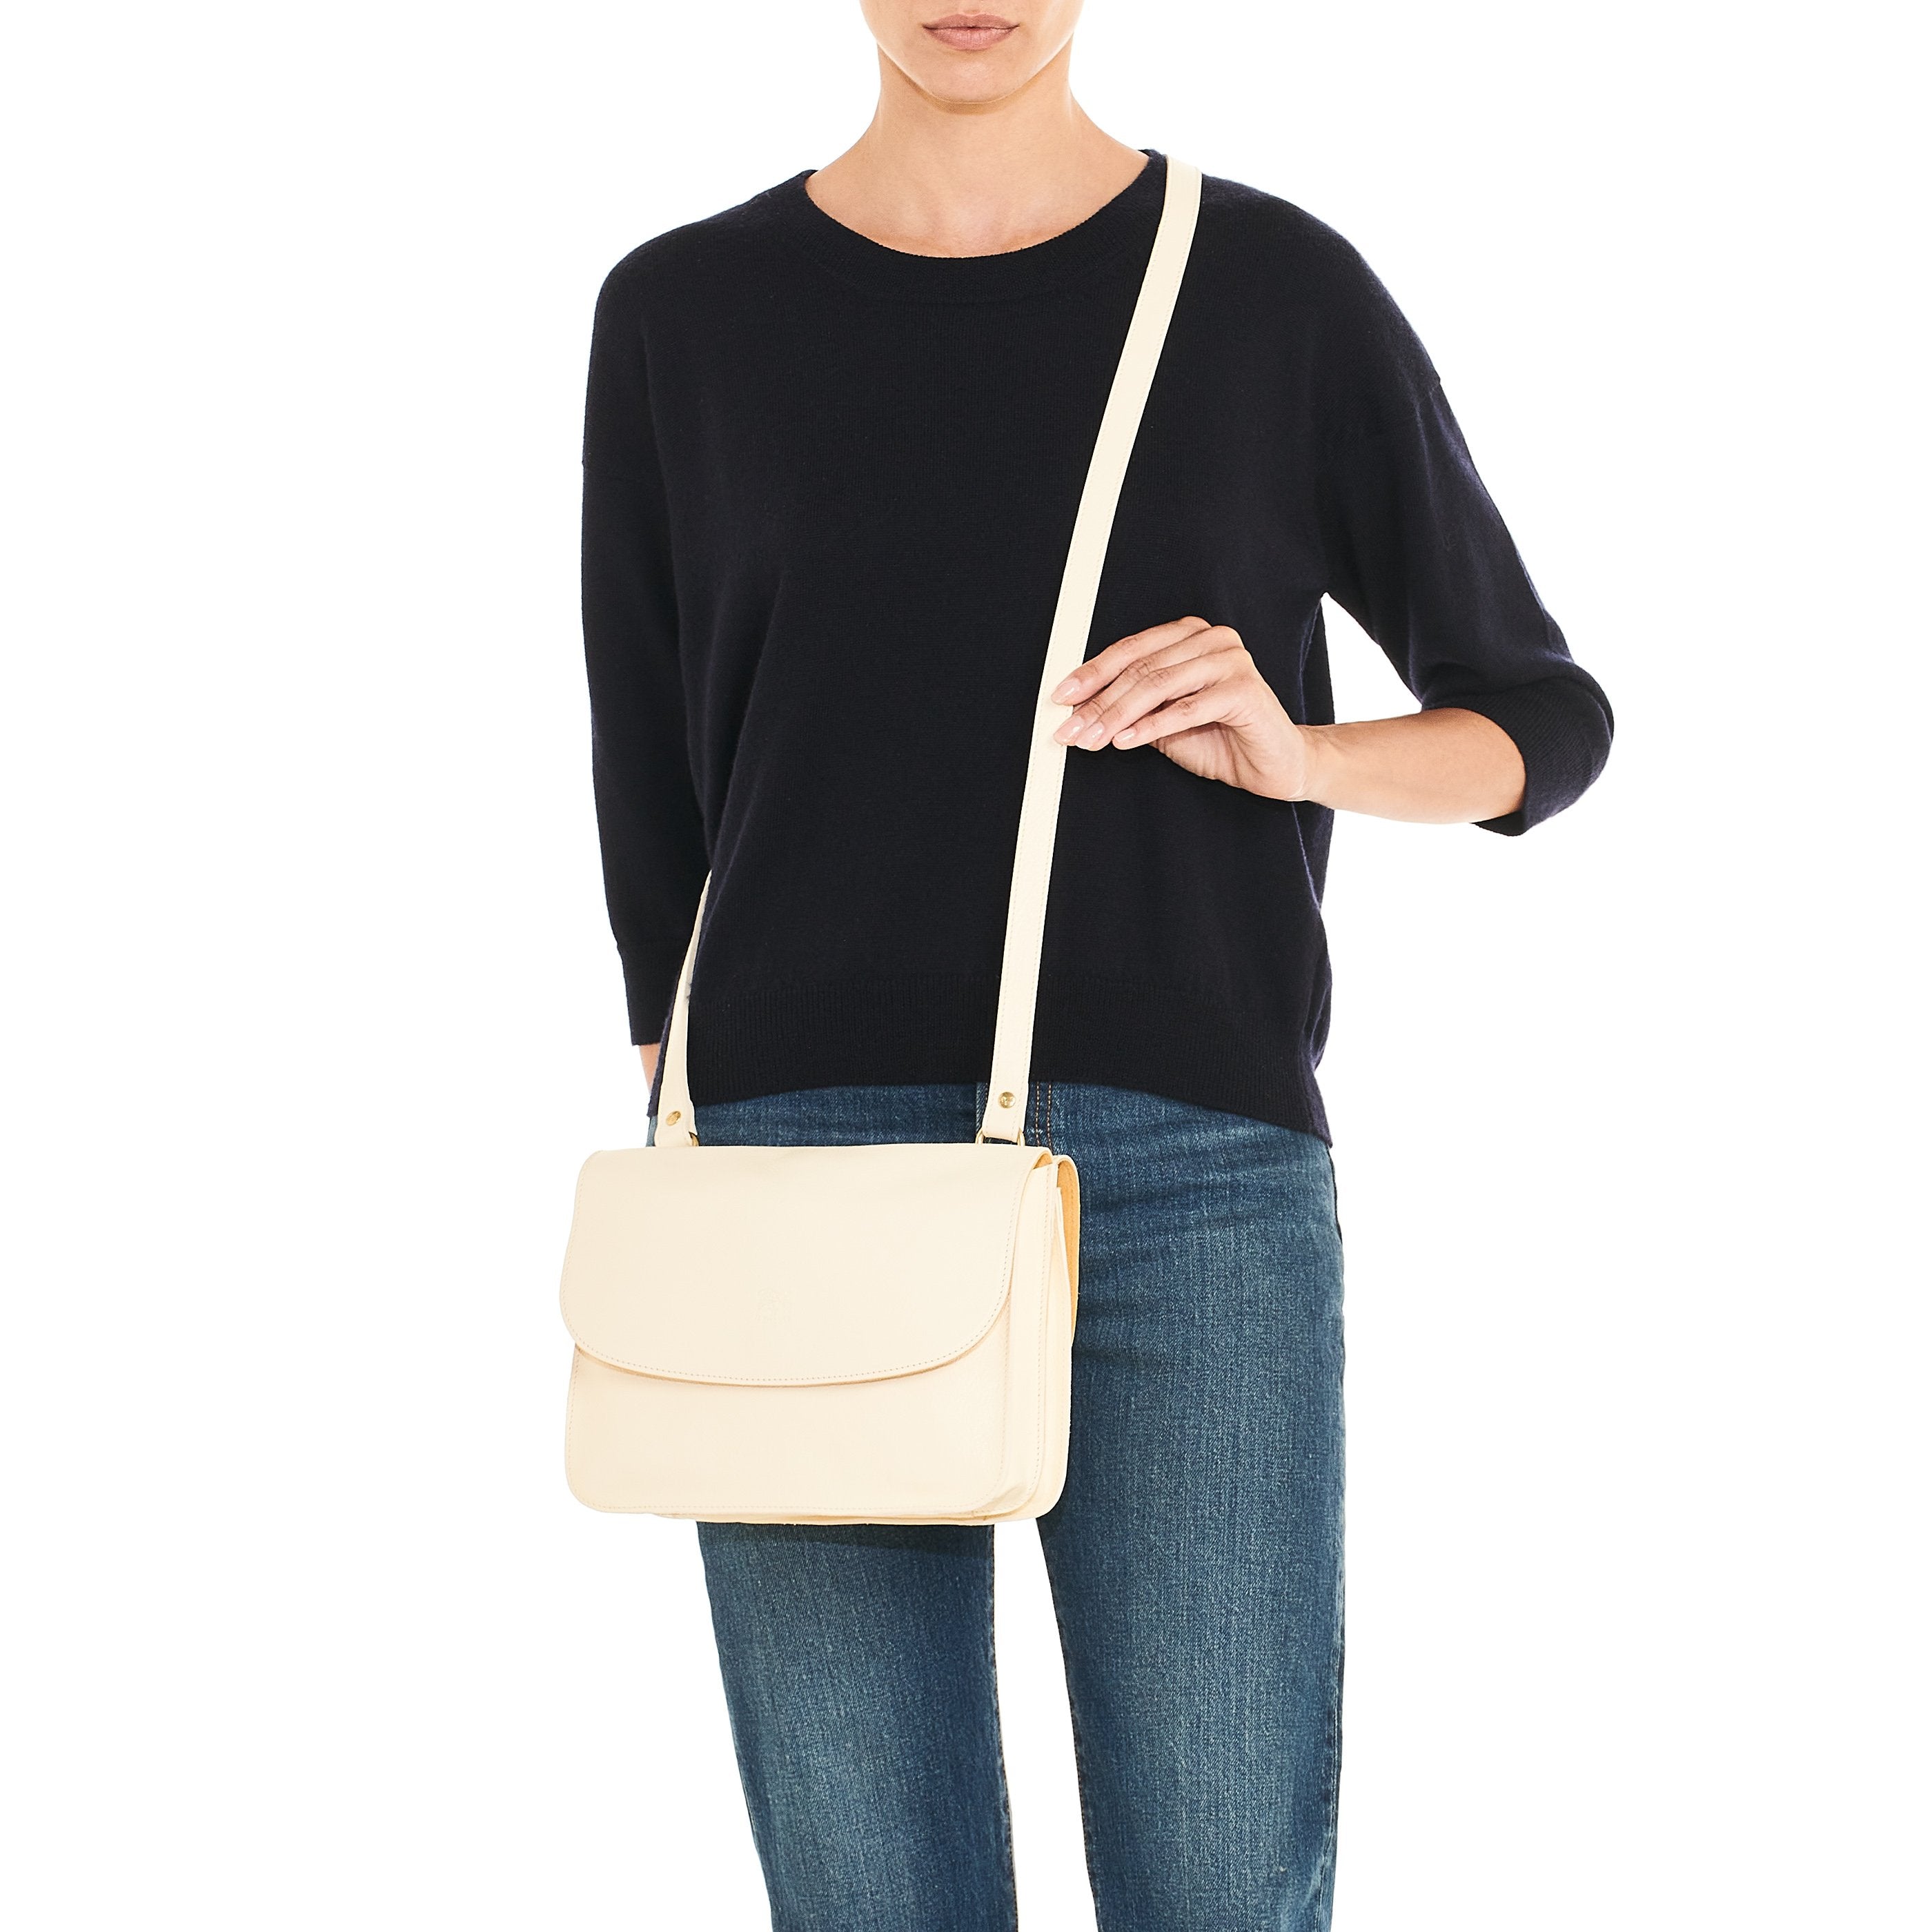 Salina | Women's crossbody bag in leather color milk